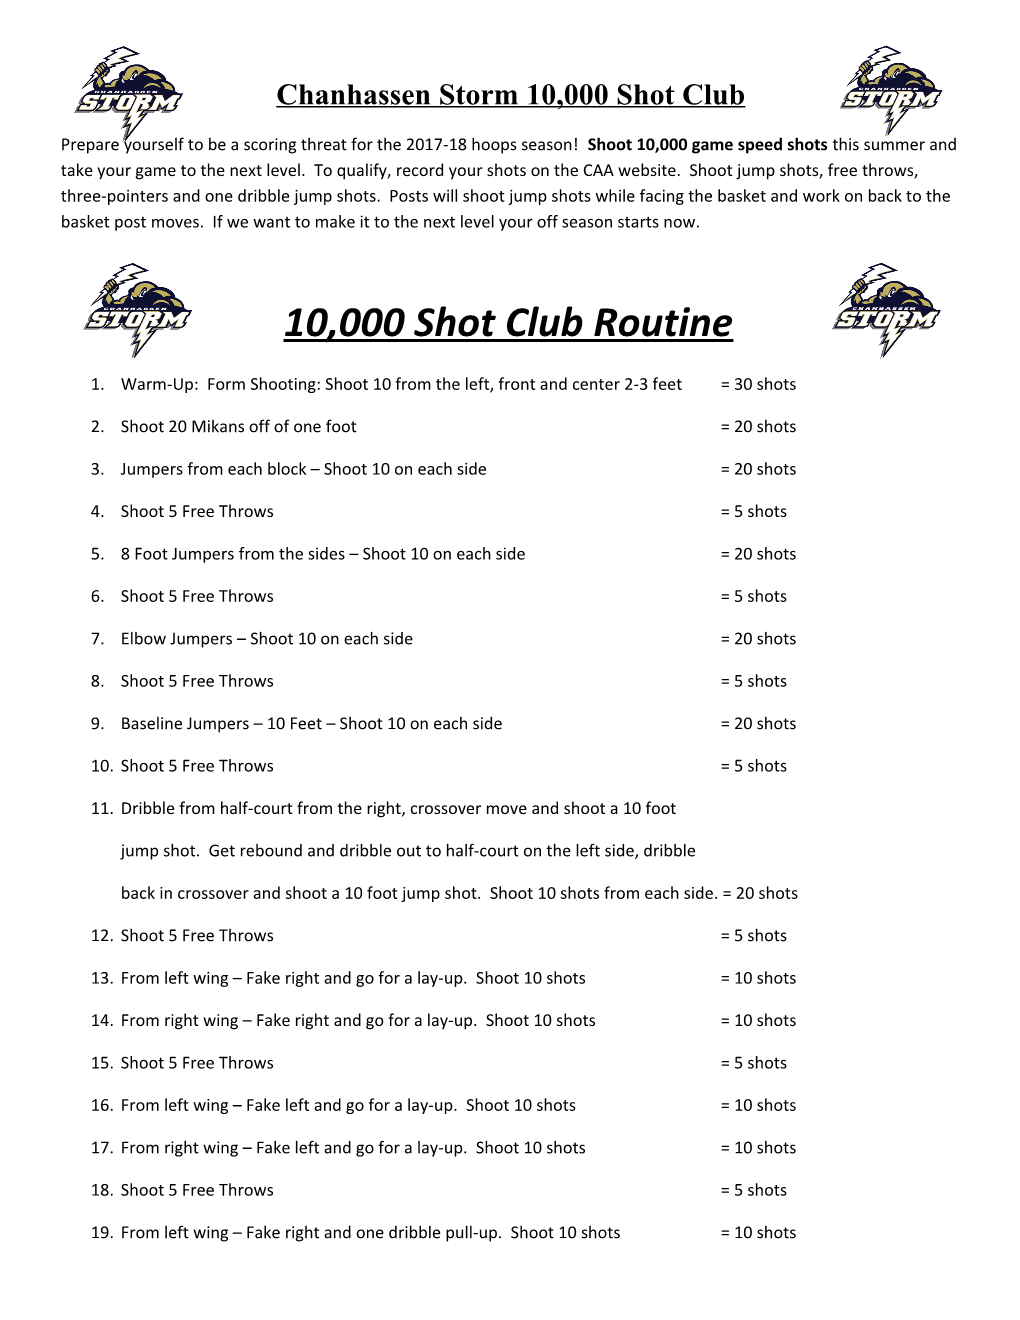 10,000 Shot Club Routine